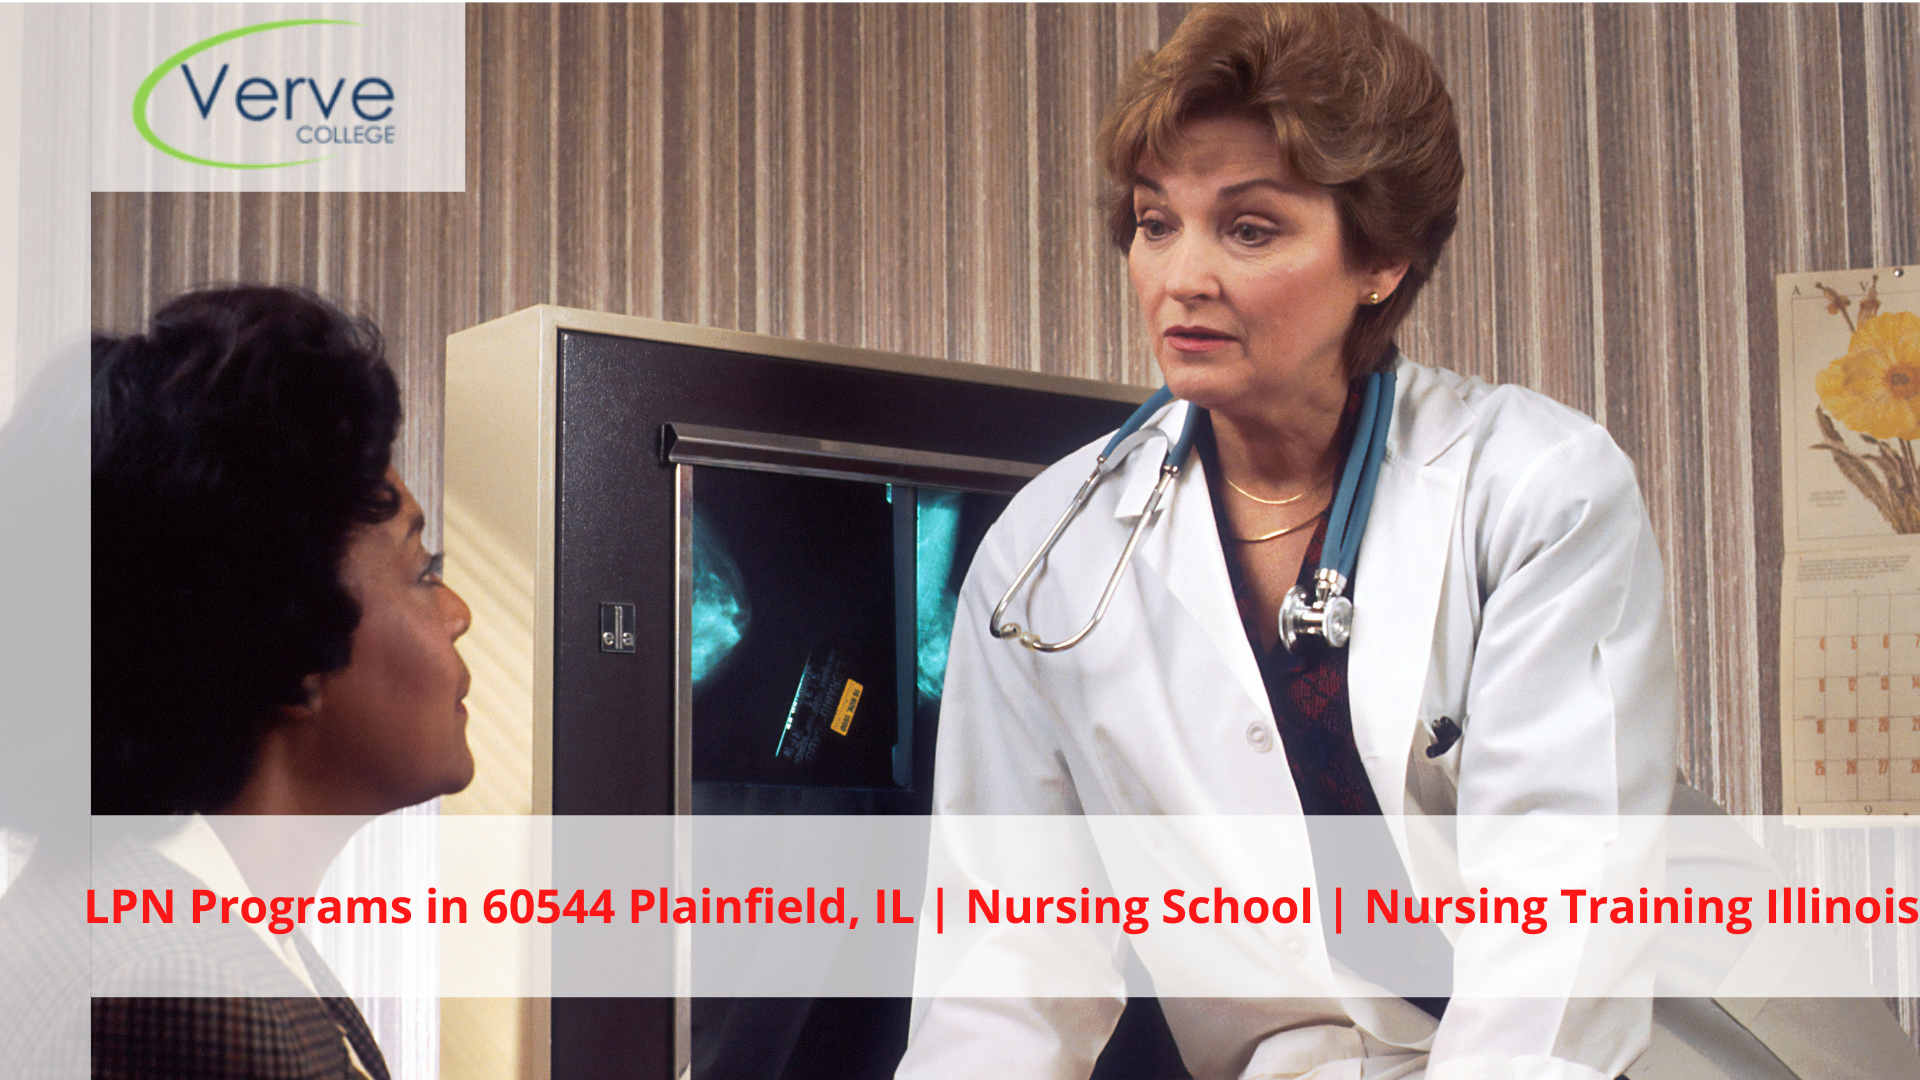 LPN Programs in 60544 Plainfield, IL | Nursing School | Nursing Training Illinois